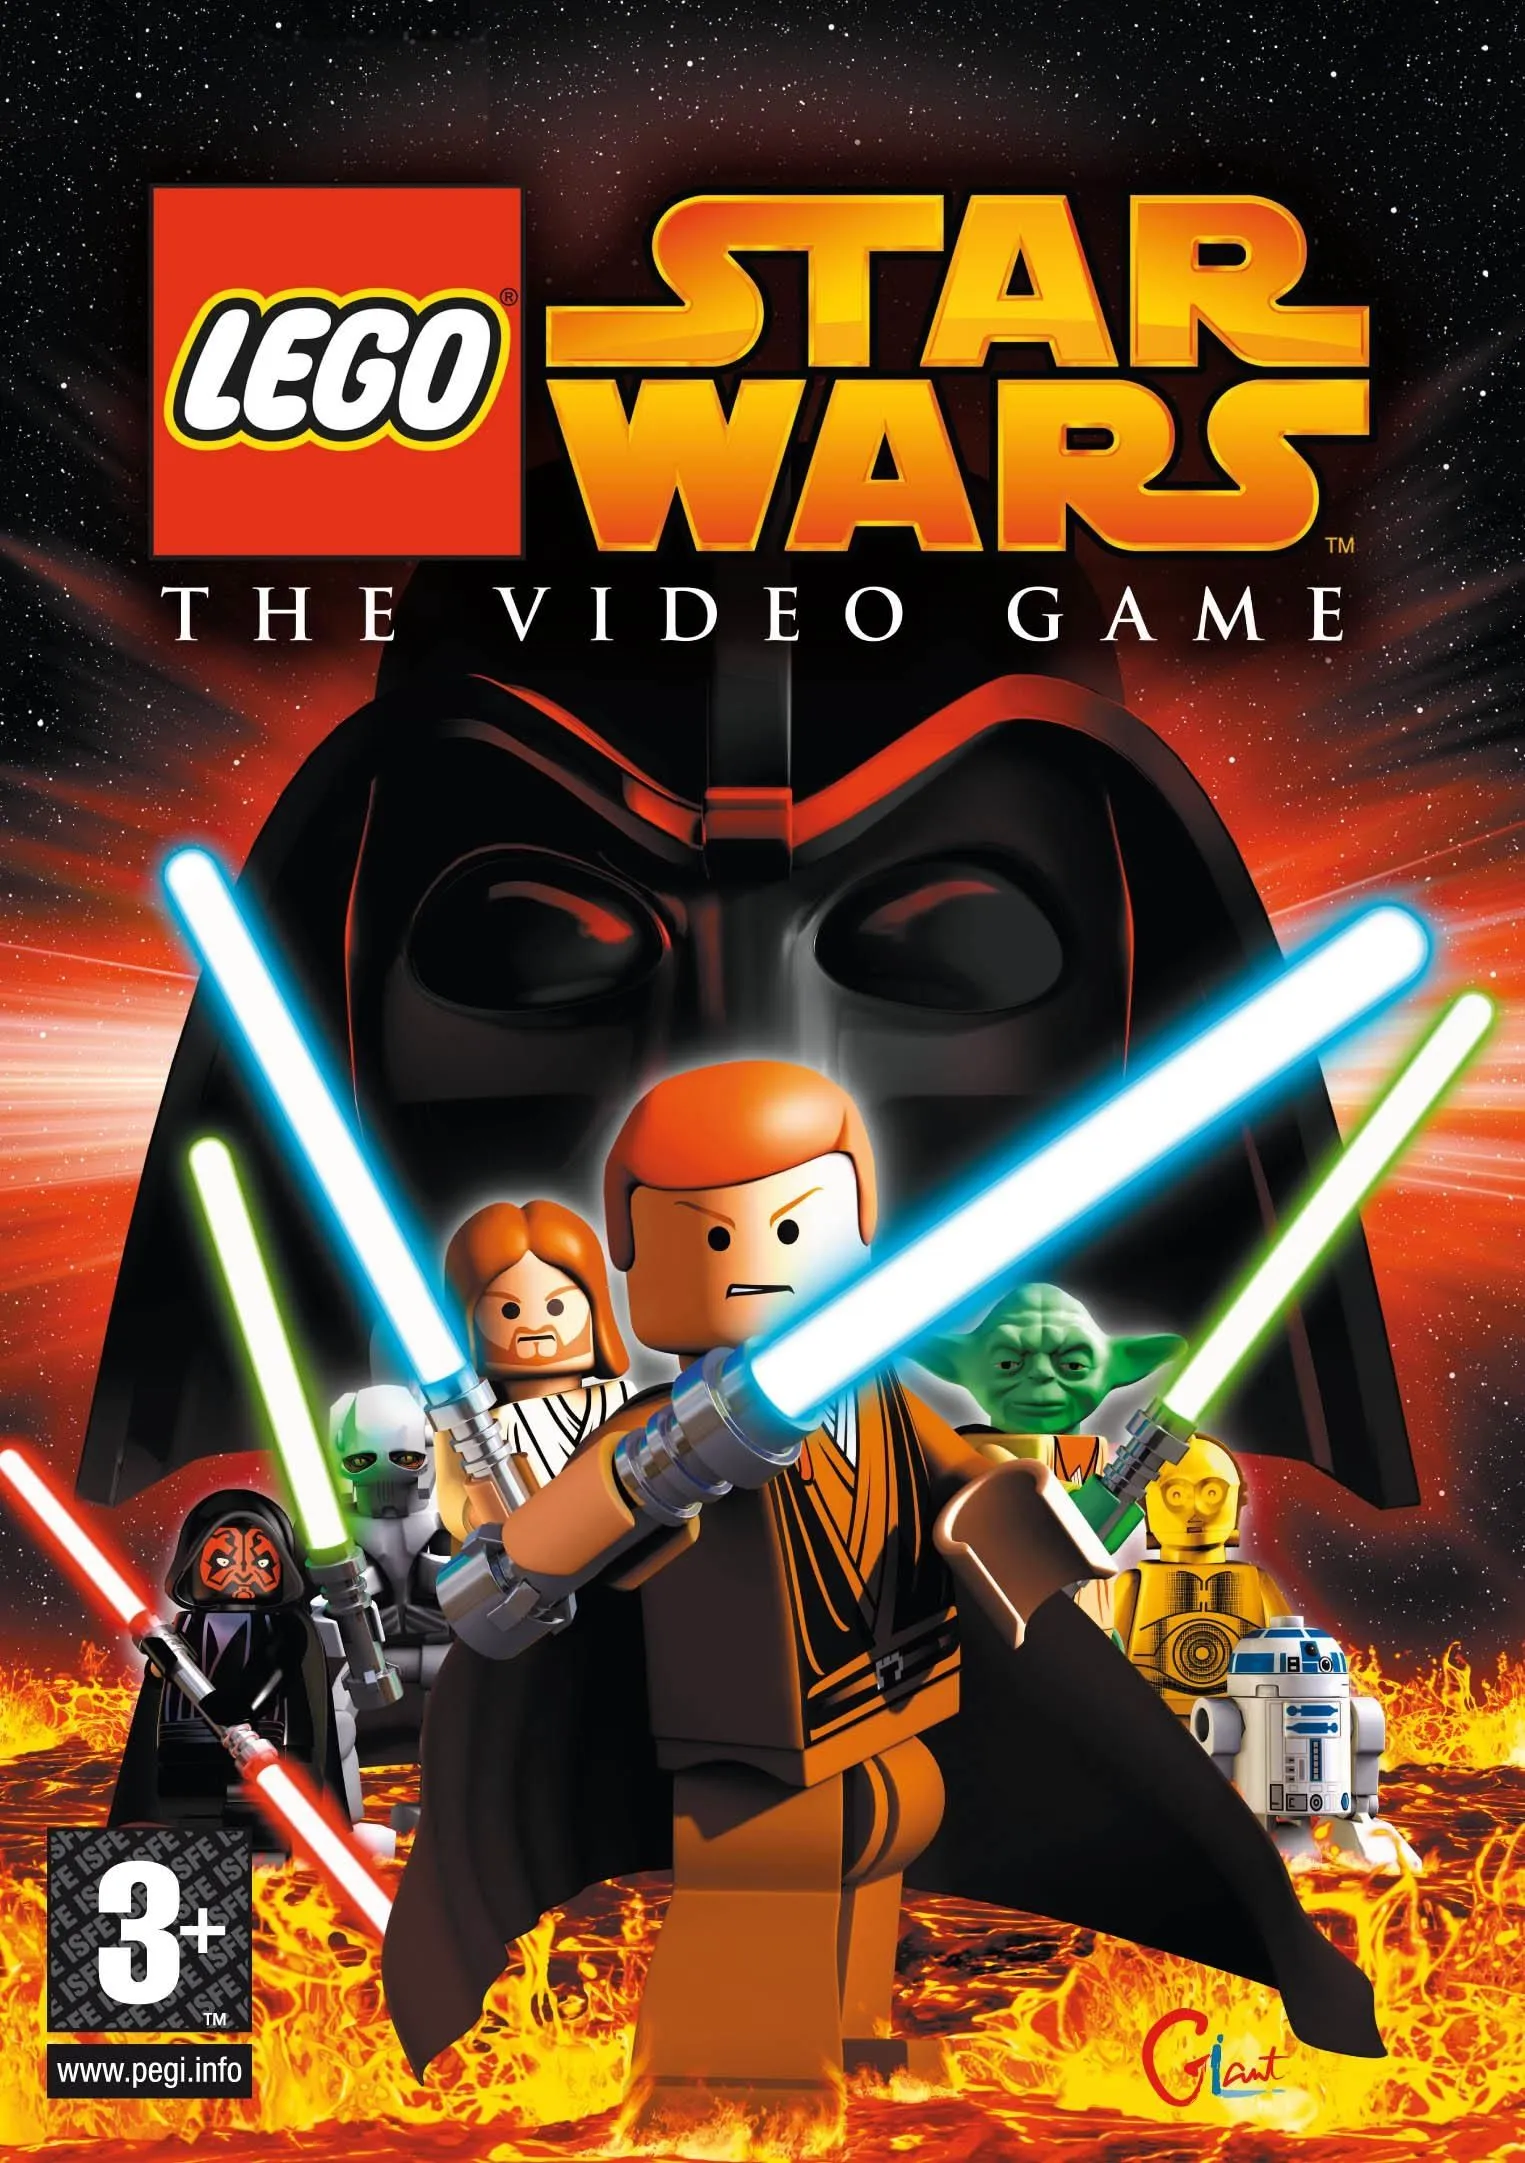 LEGO Star Wars: The Video Game - Wookieepedia, the Star Wars Wiki